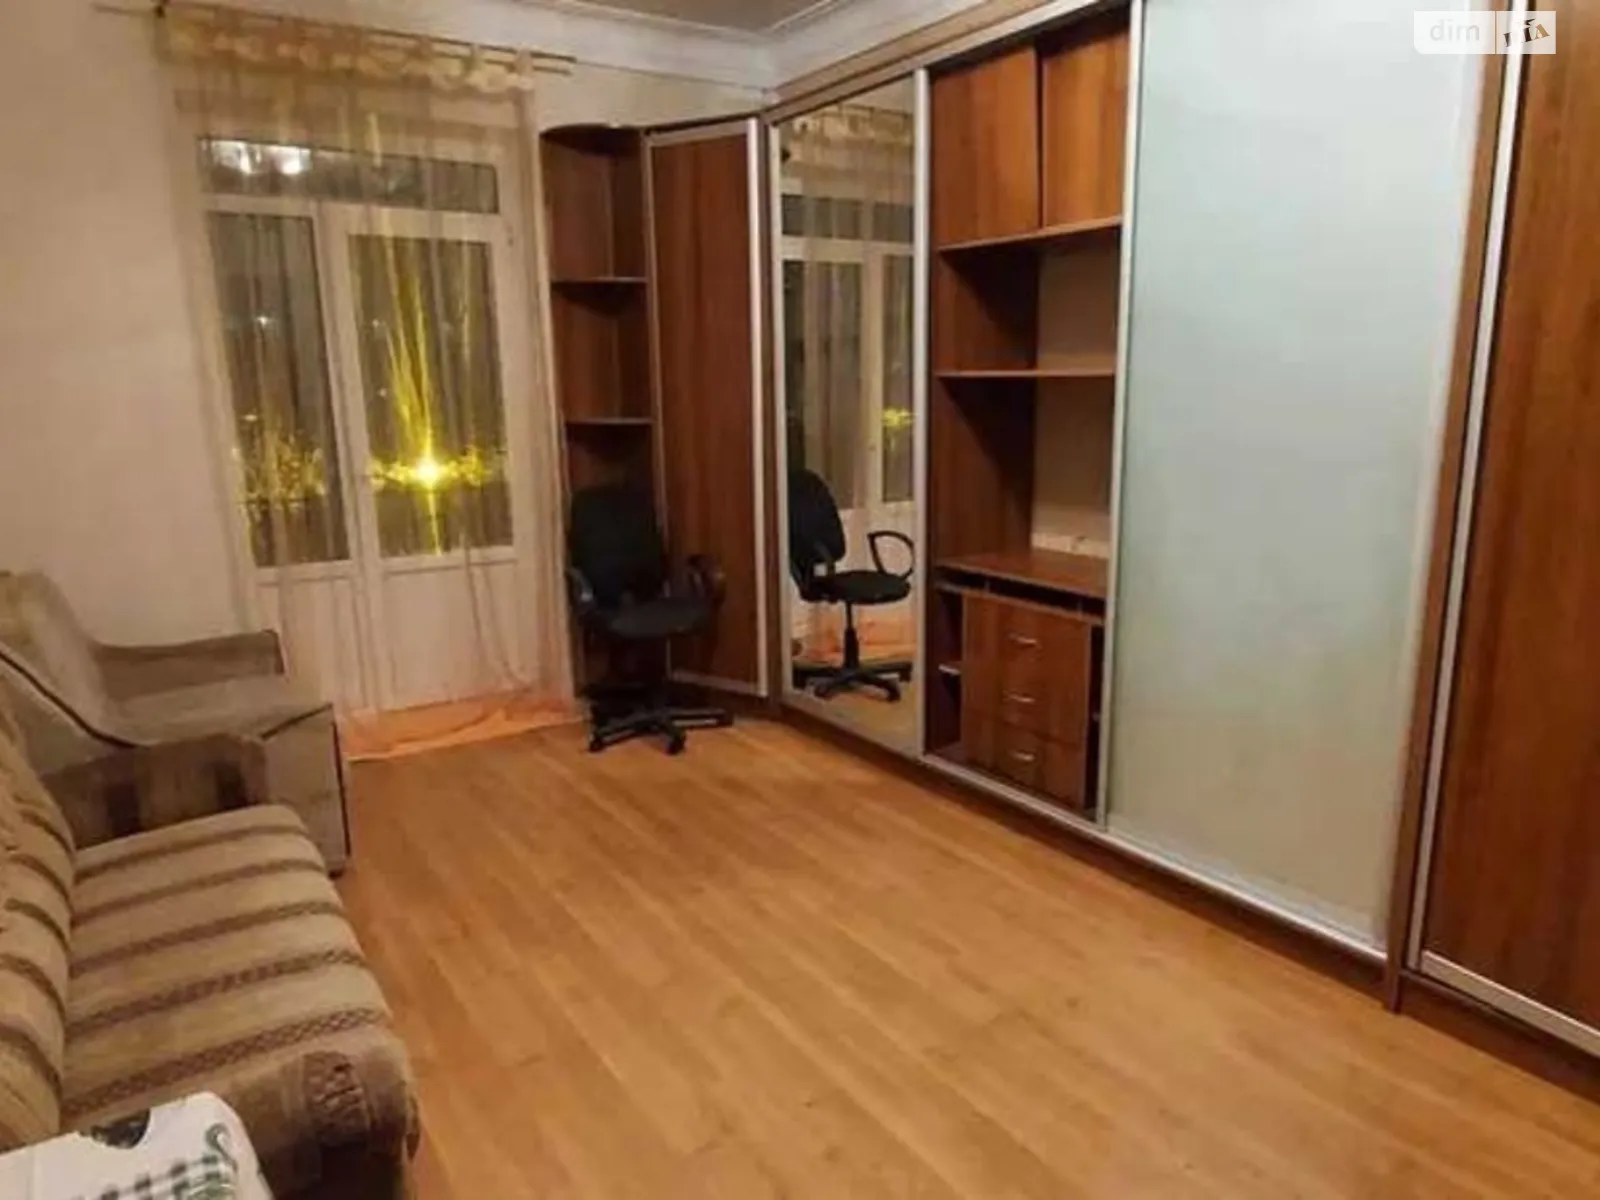 Сдается в аренду комната 20 кв. м в Киеве, цена: 4000 грн - фото 1